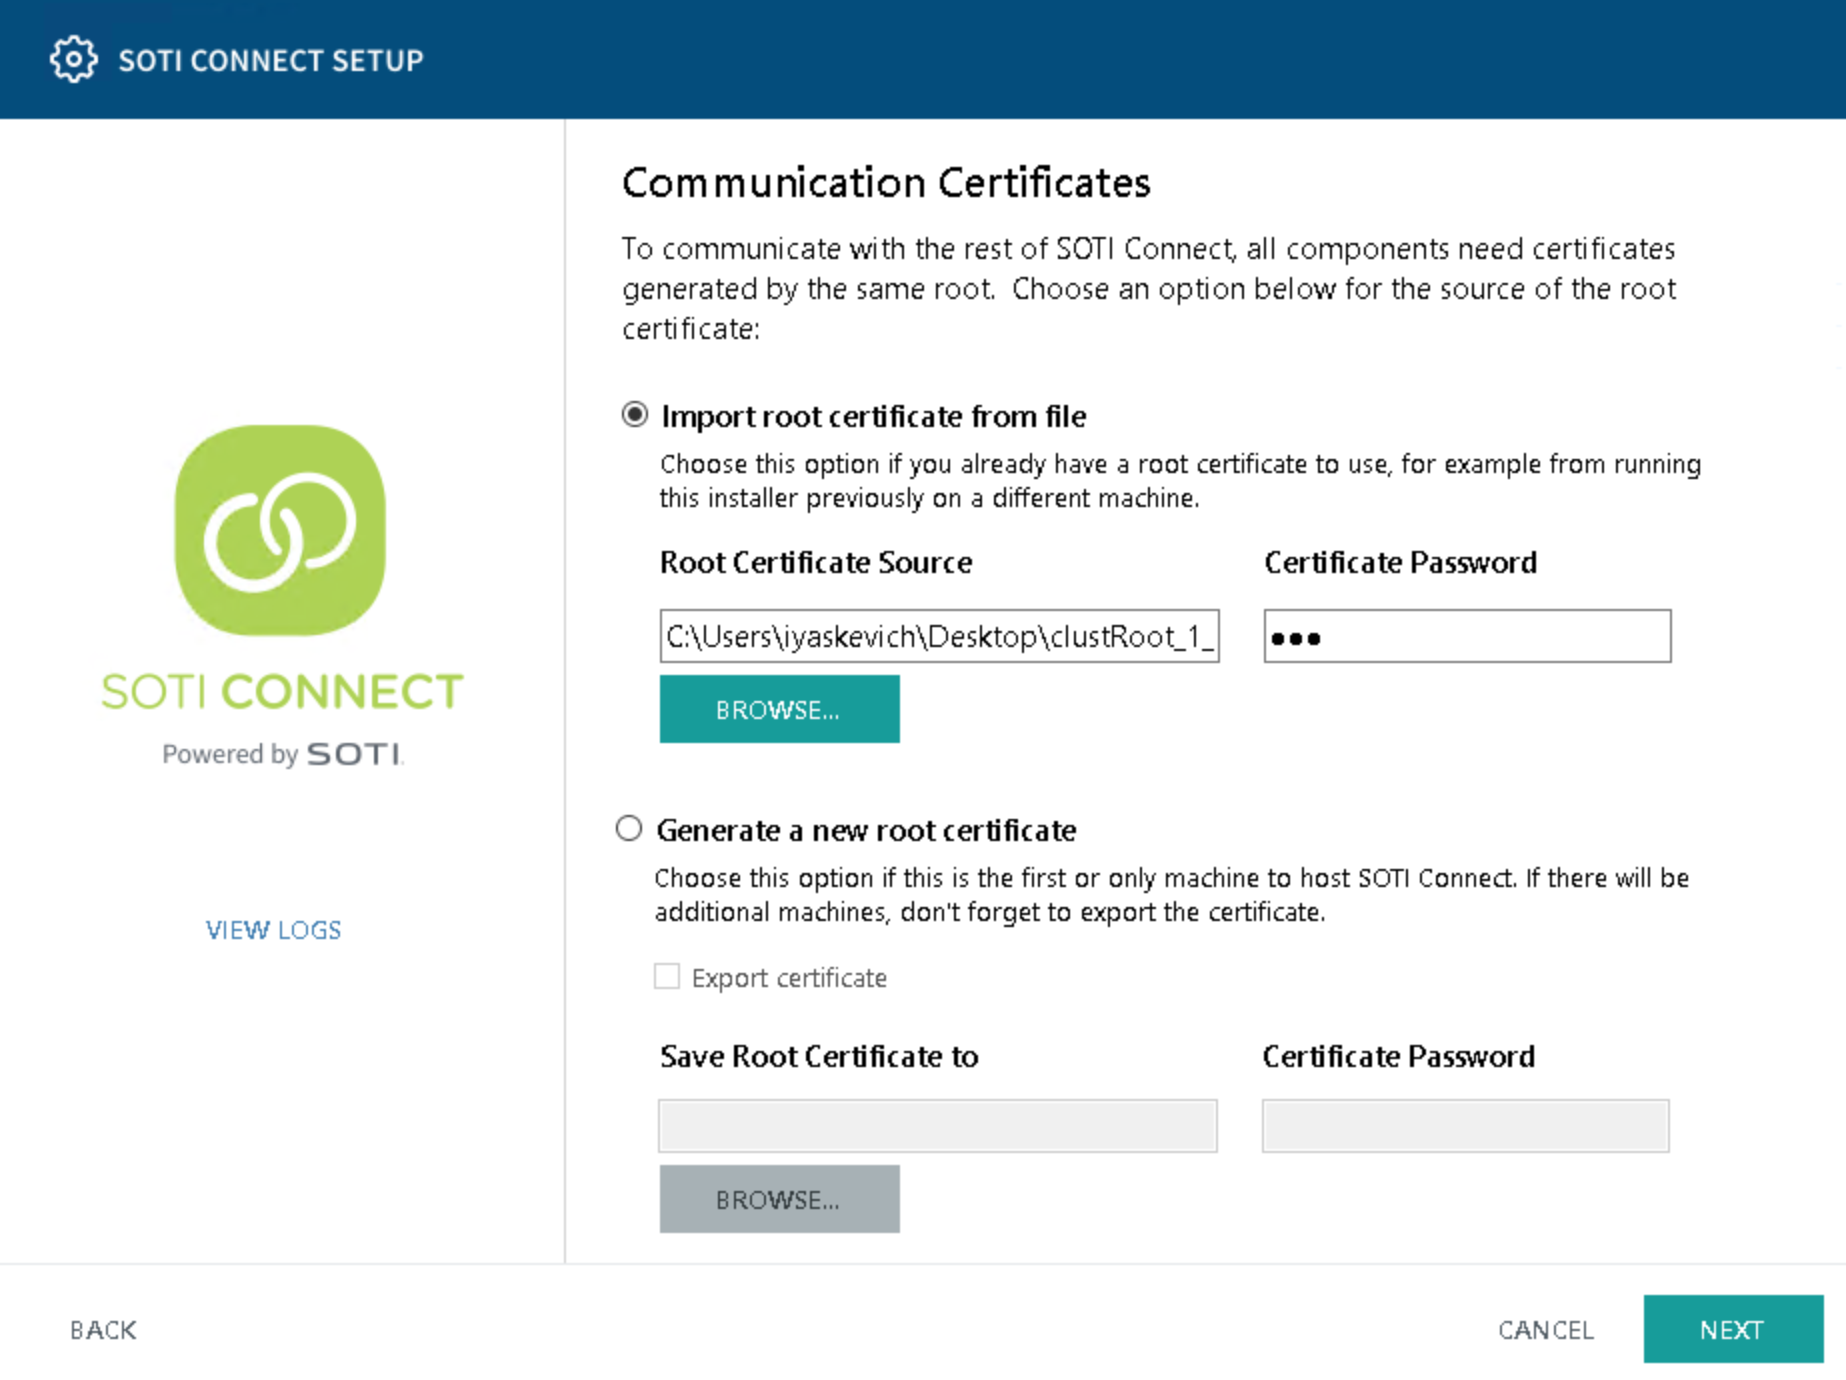 Specify a communication certificate